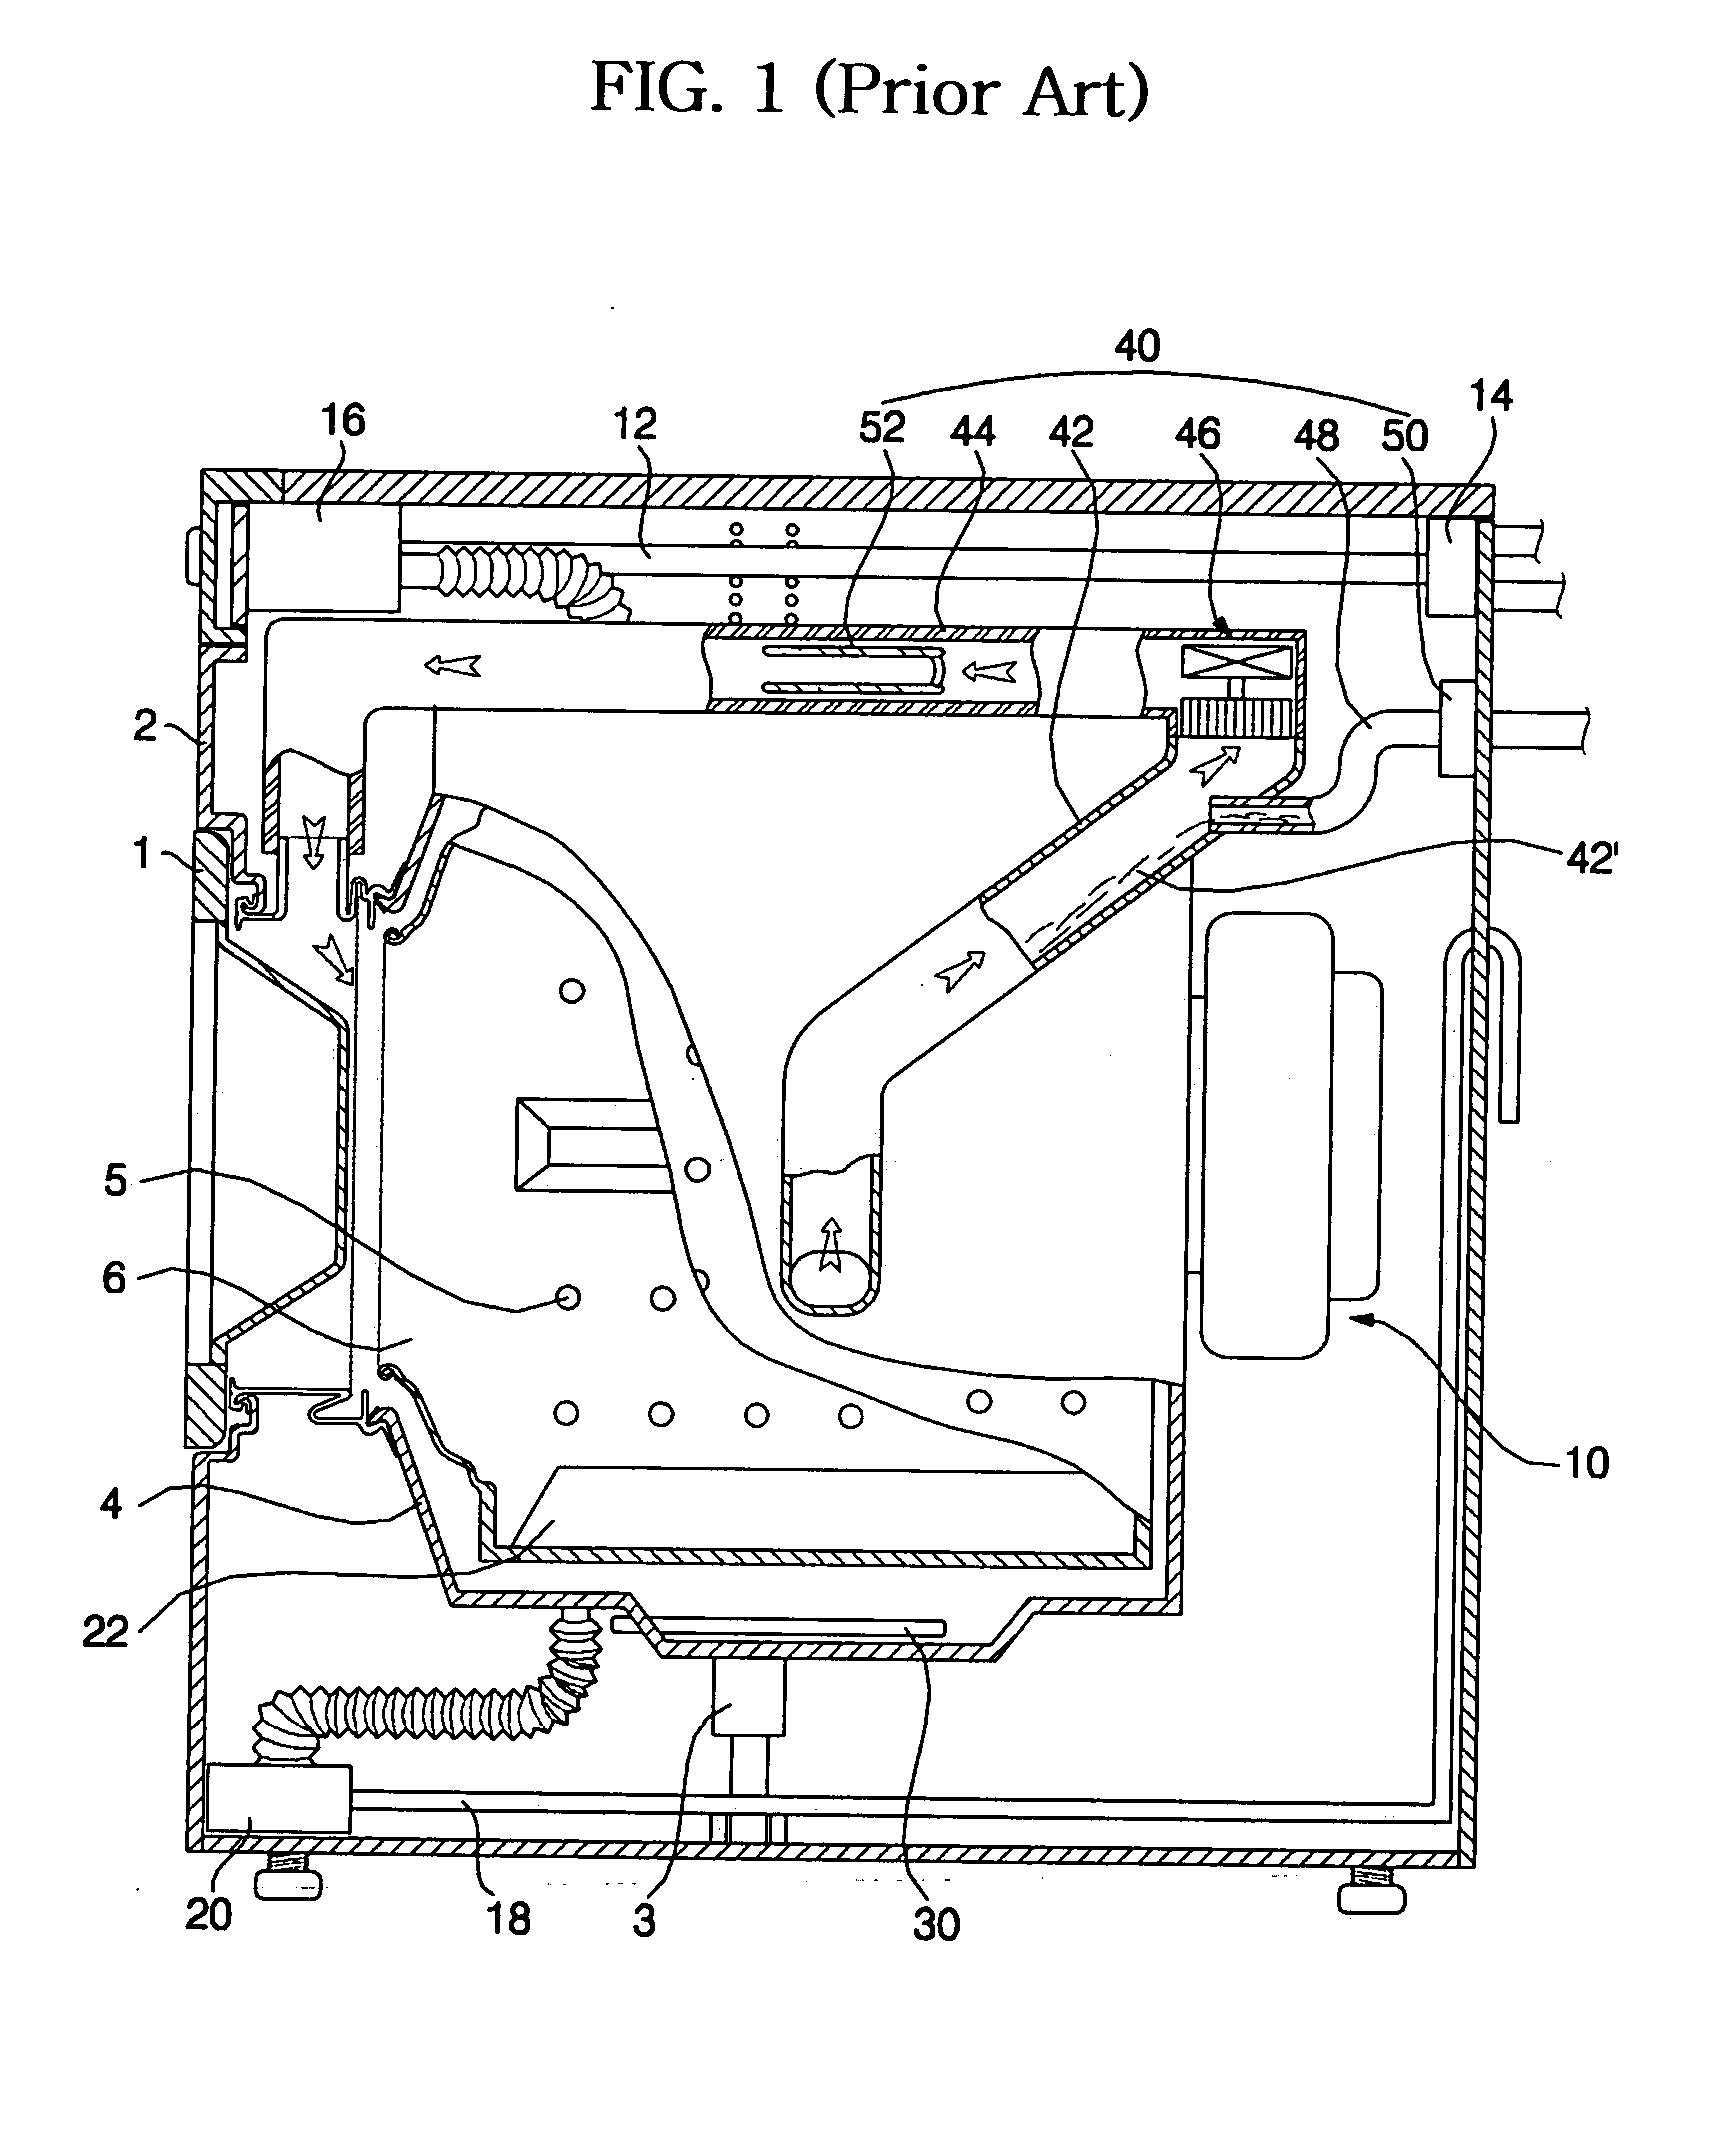 Heating apparatus of washing machine and washing method thereof